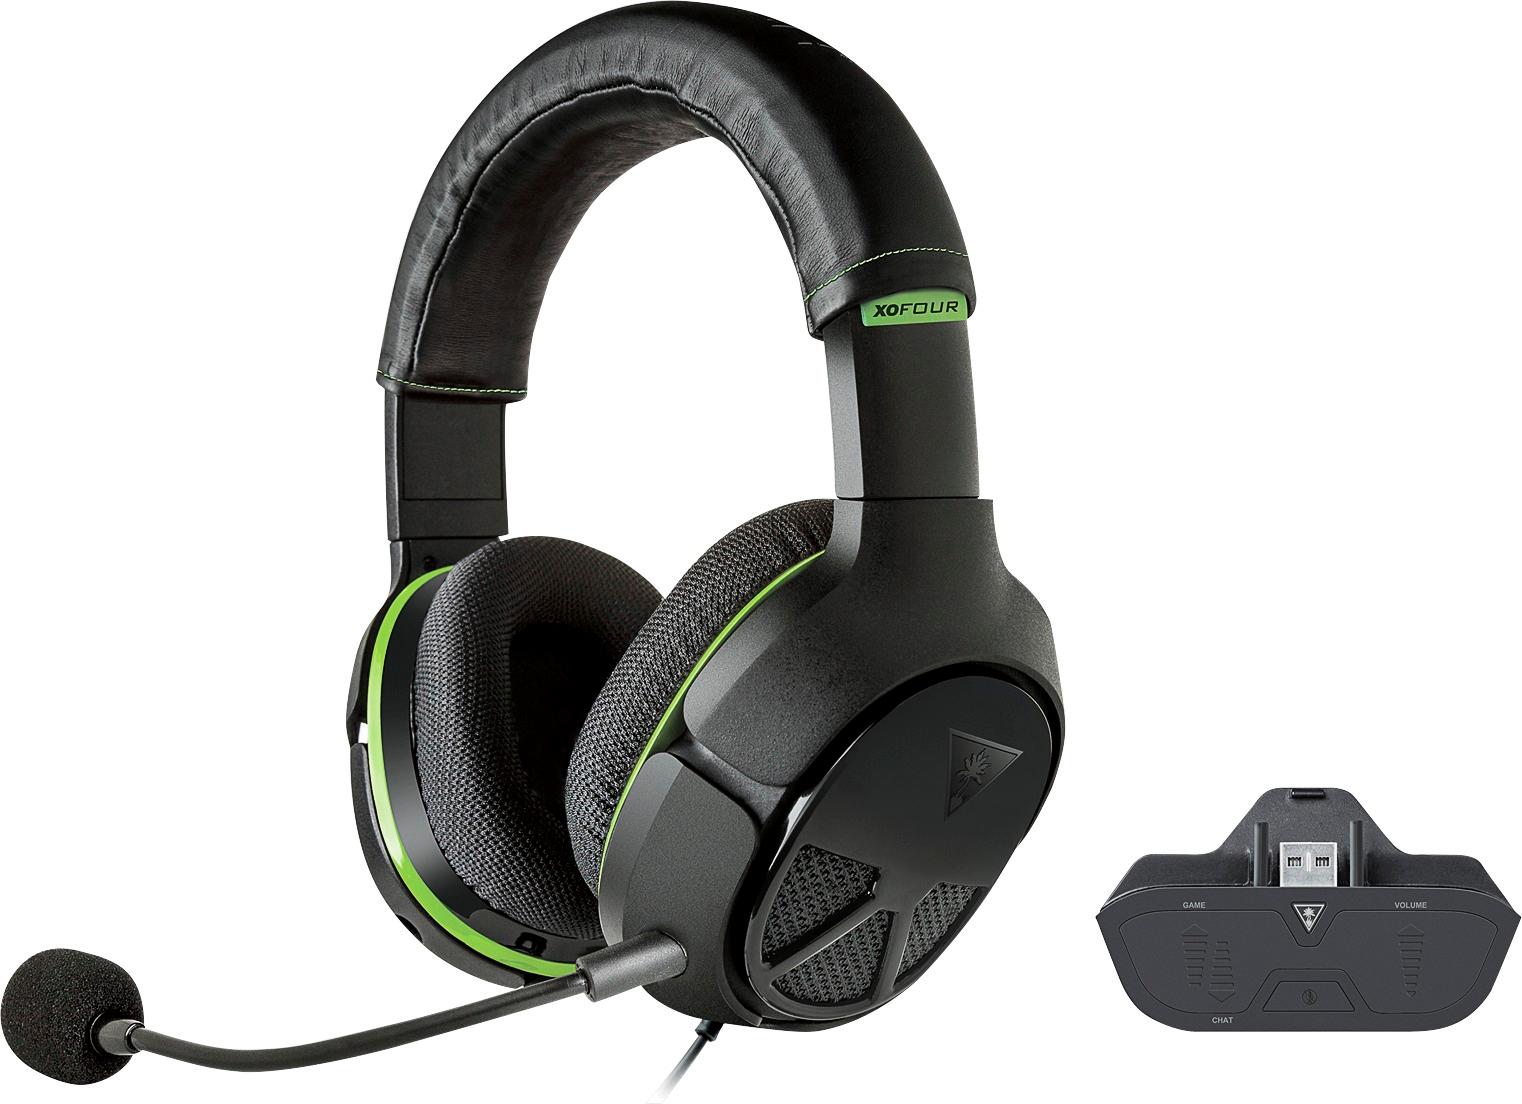 Xbox One Audio Freedom: Disconnecting Wireless Turtle Beach Headset